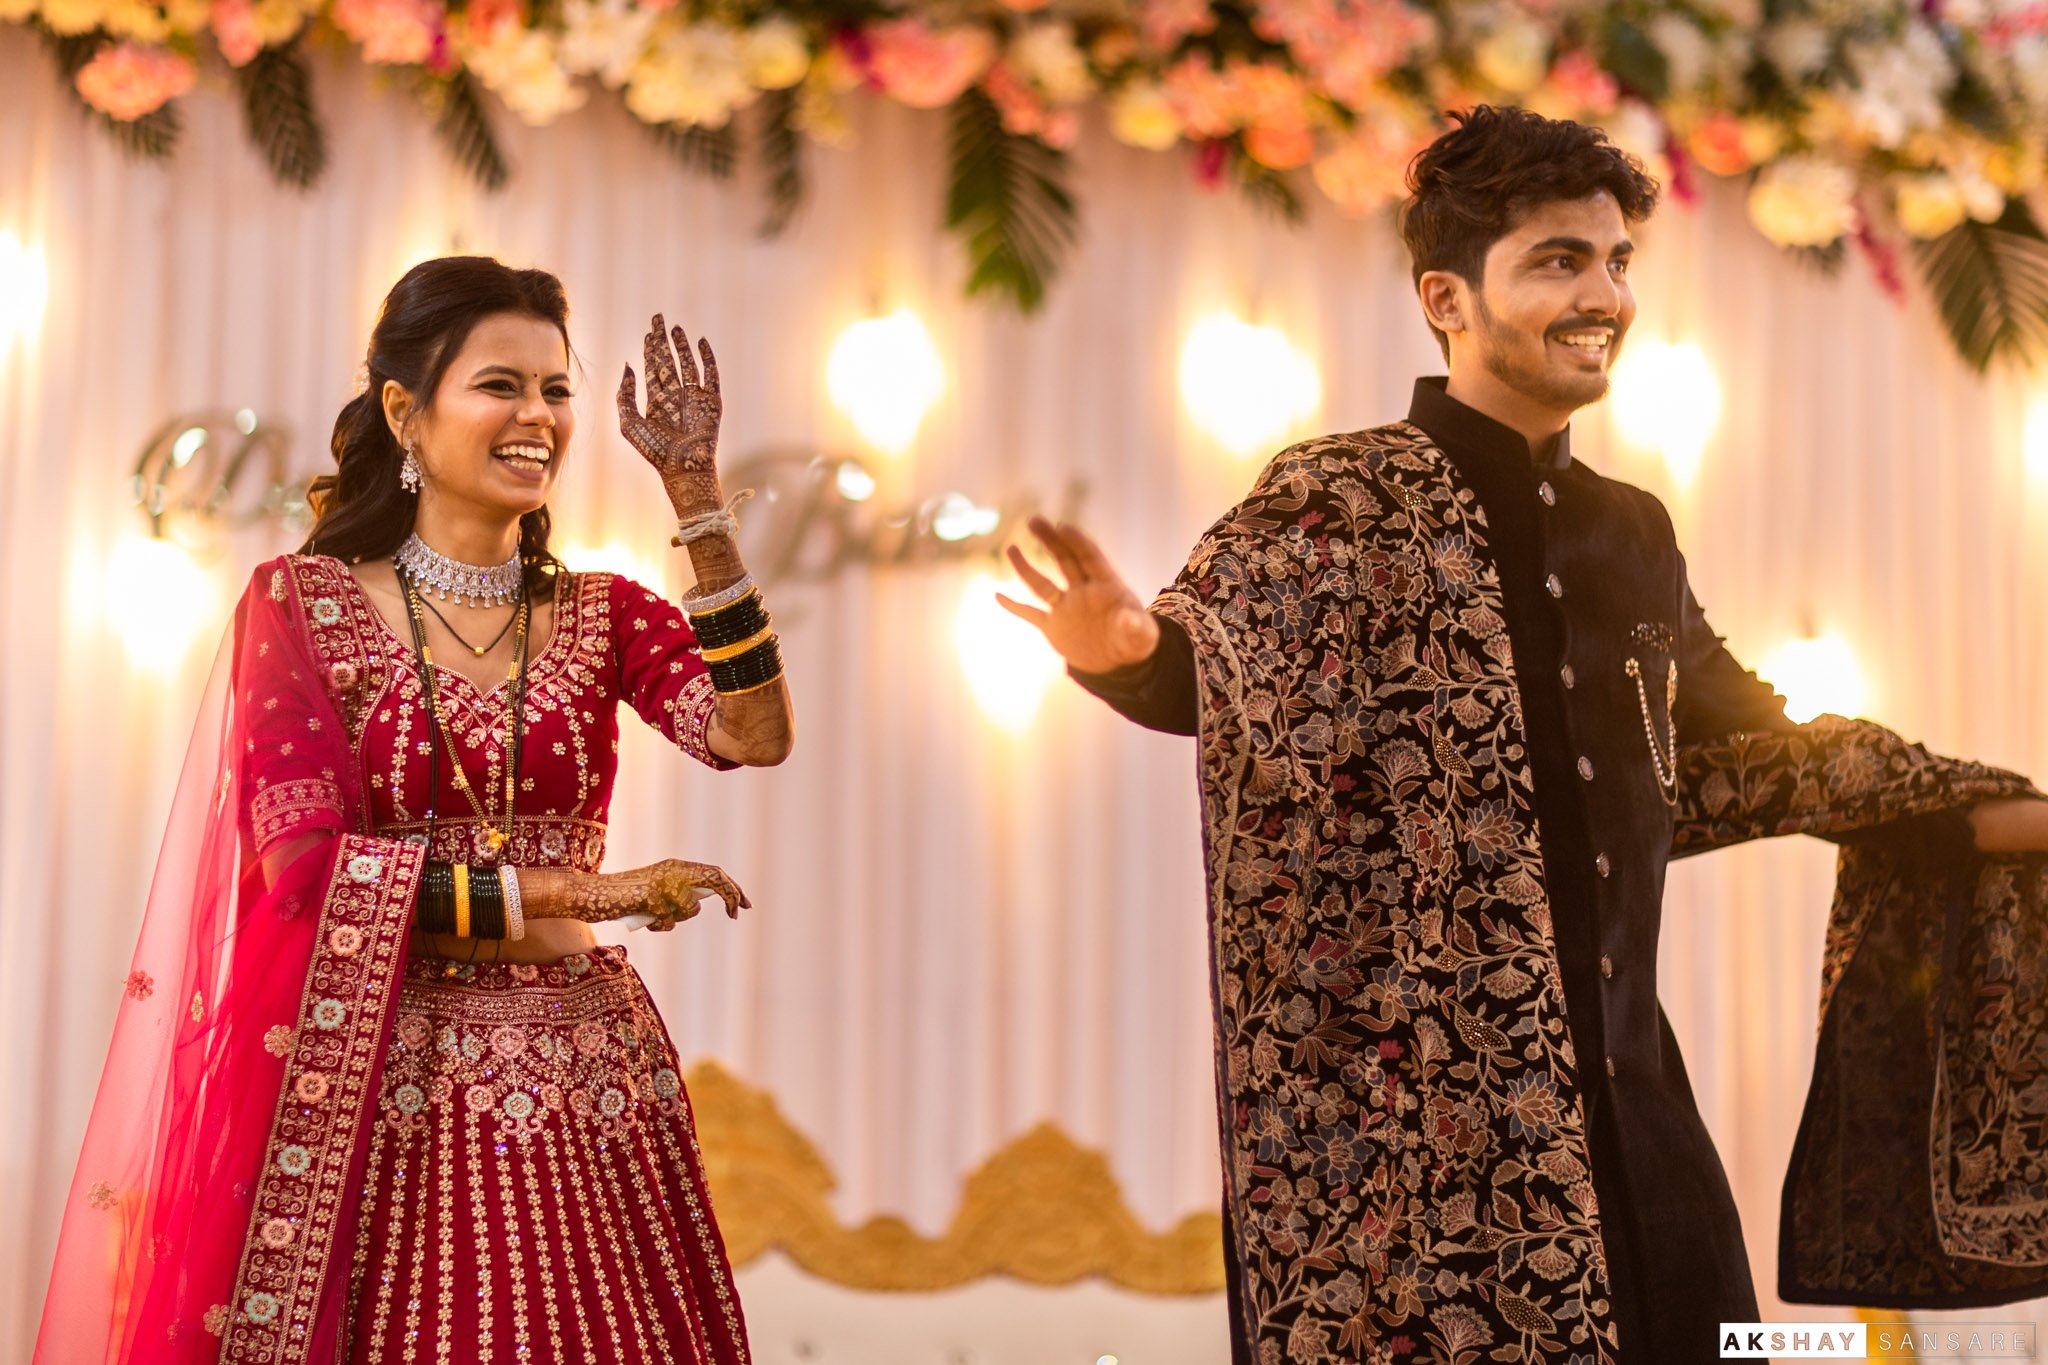 Dakshay x Basuri wedding c | Akshay Sansare Photography -47.jpg